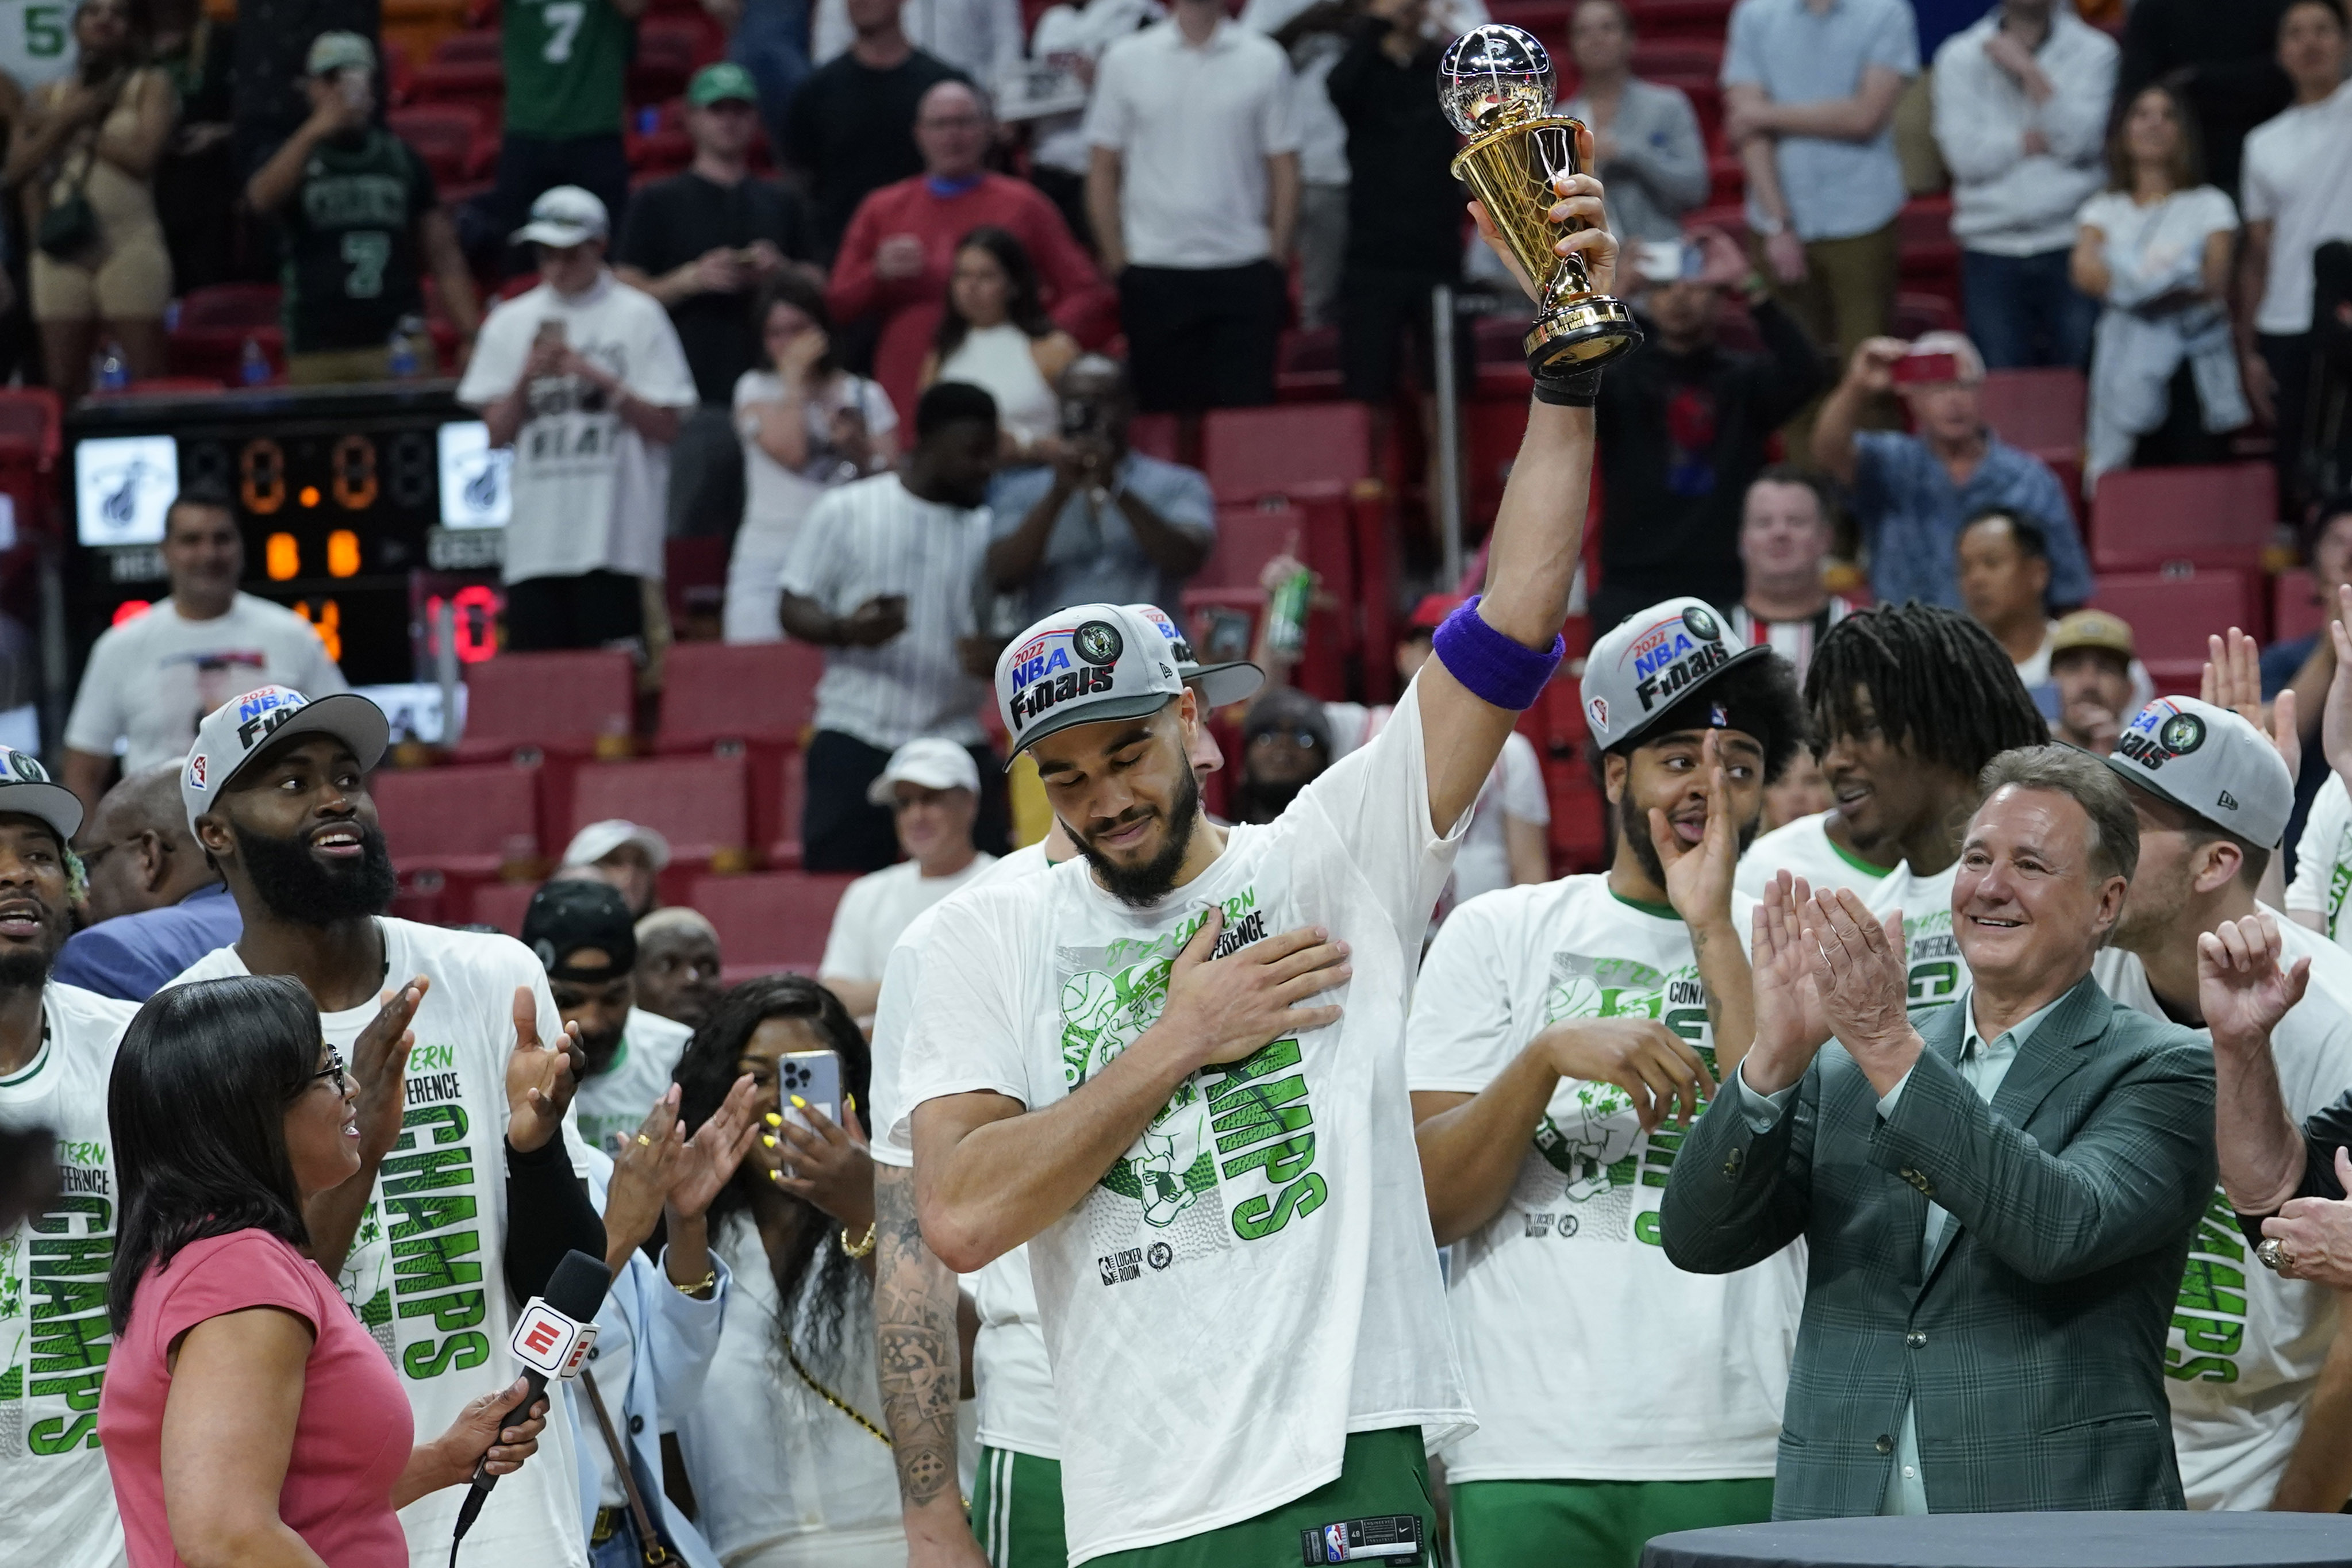 Boston Celtics Celtics Store 2022 Eastern Conference Champions